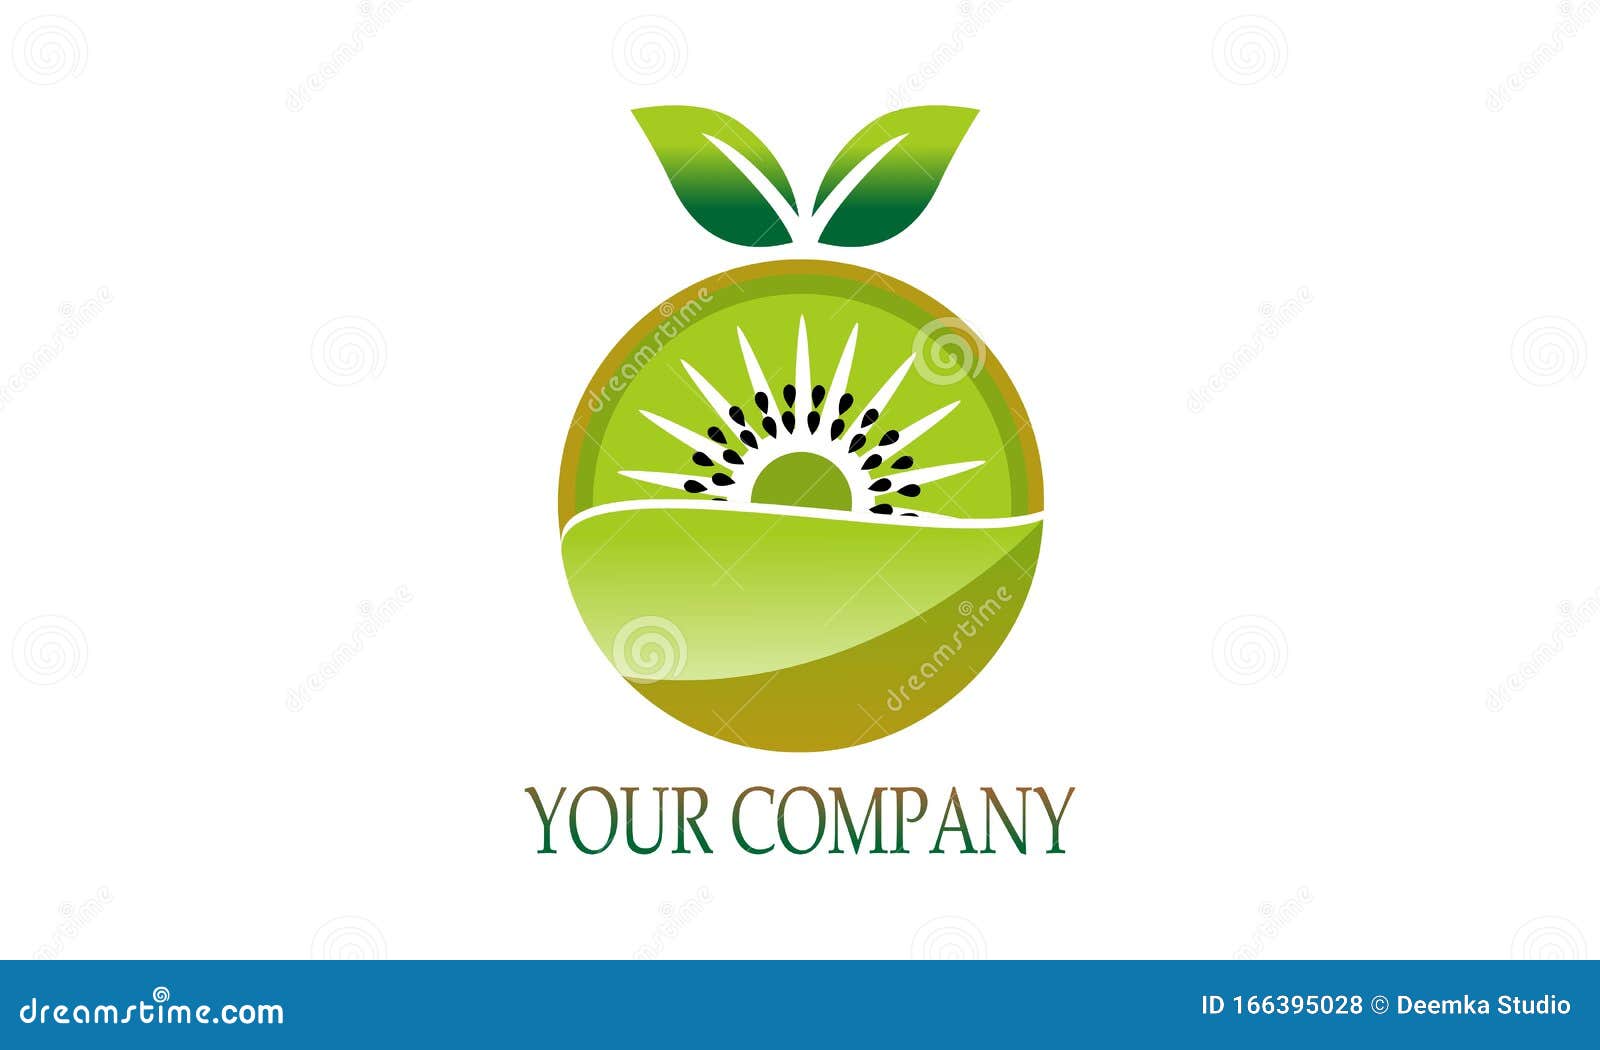 Premium Vector  Kiwi fruit logo design concept template fresh fruit logo  design